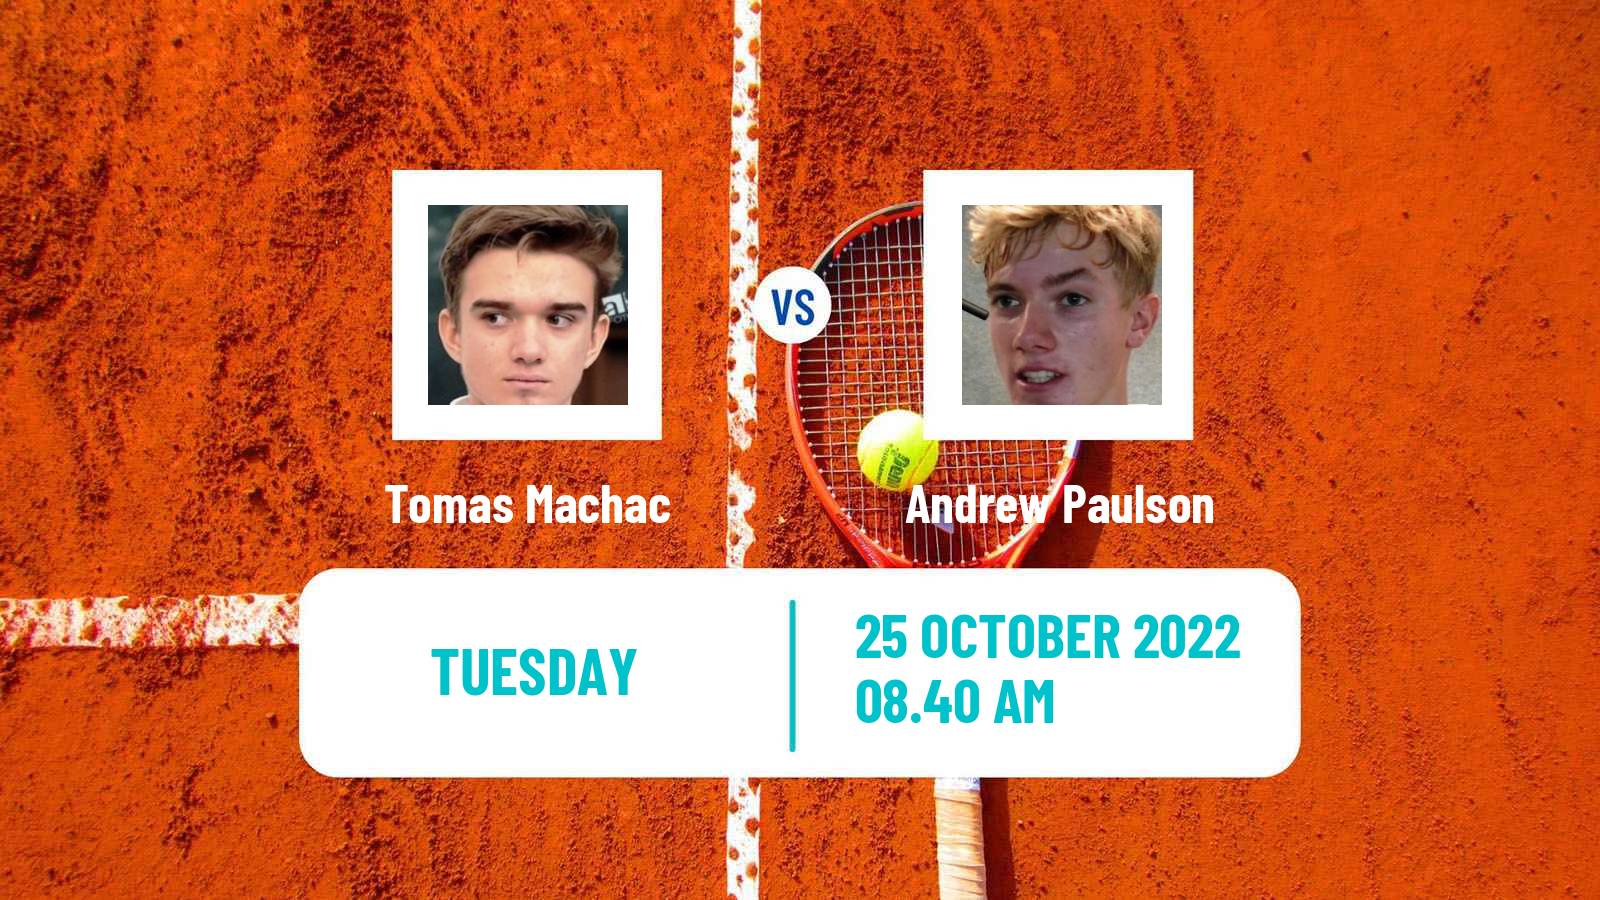 Tennis ATP Challenger Tomas Machac - Andrew Paulson